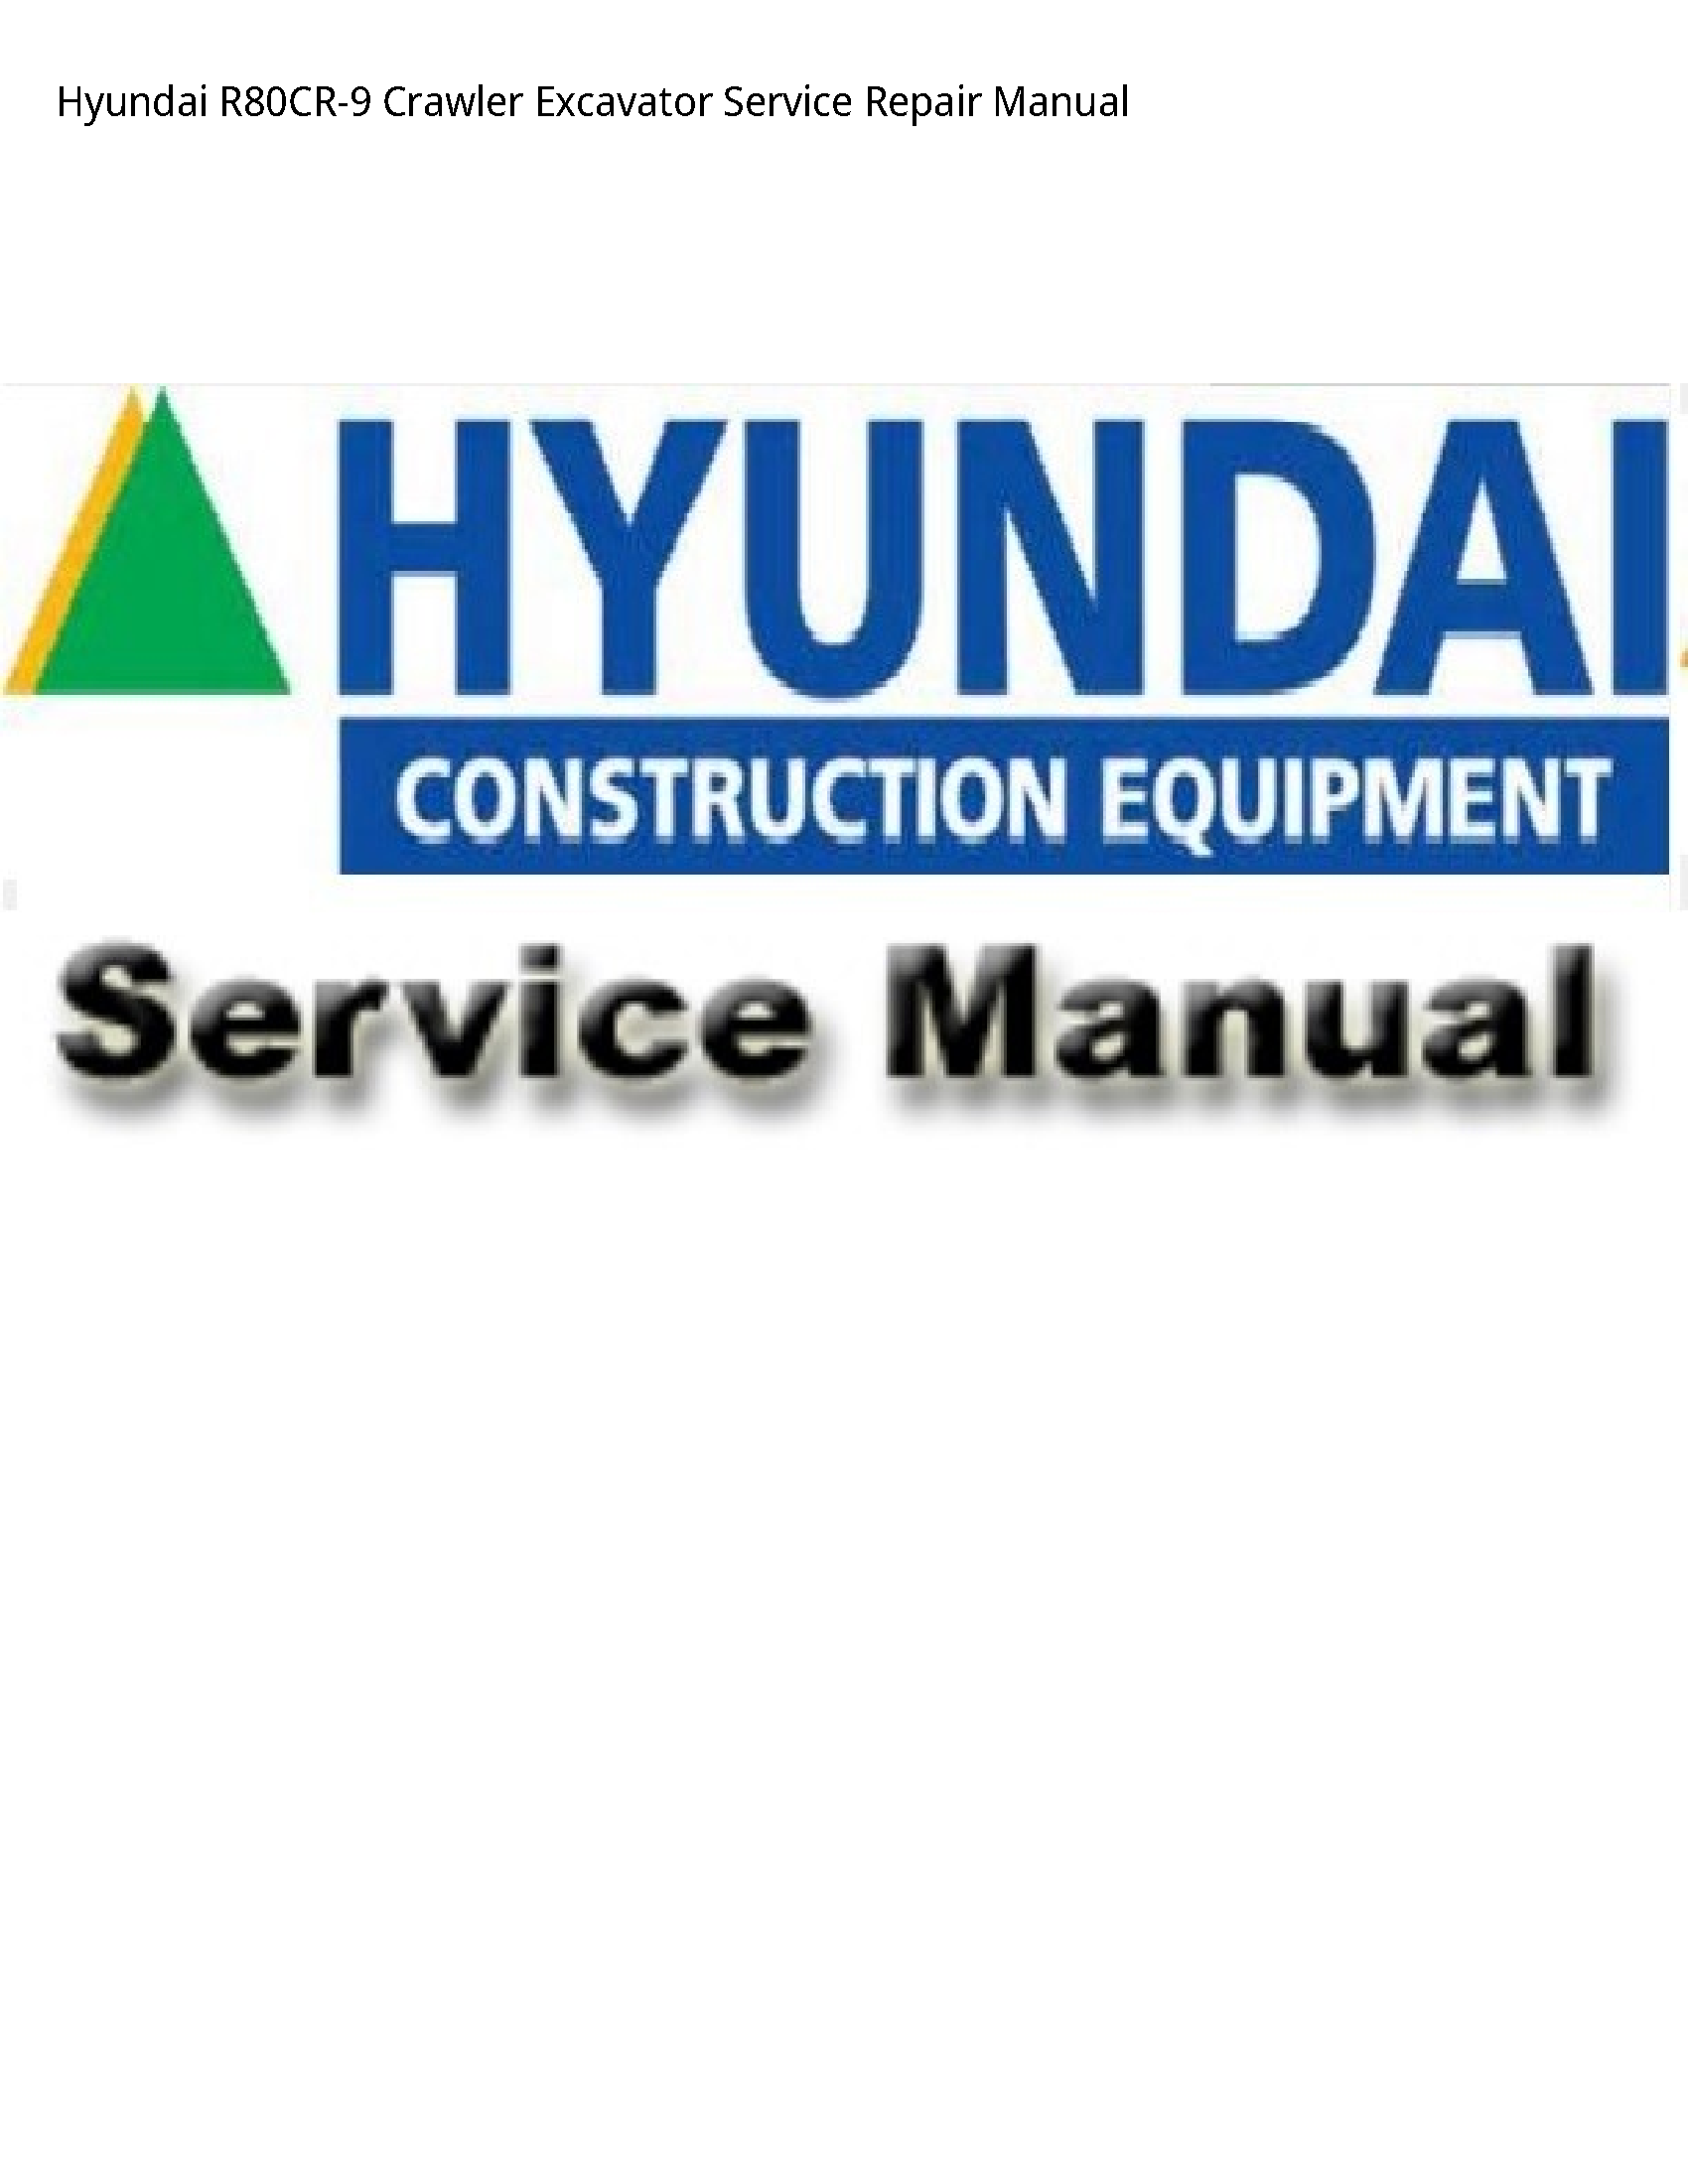 Hyundai R80CR-9 Crawler Excavator manual